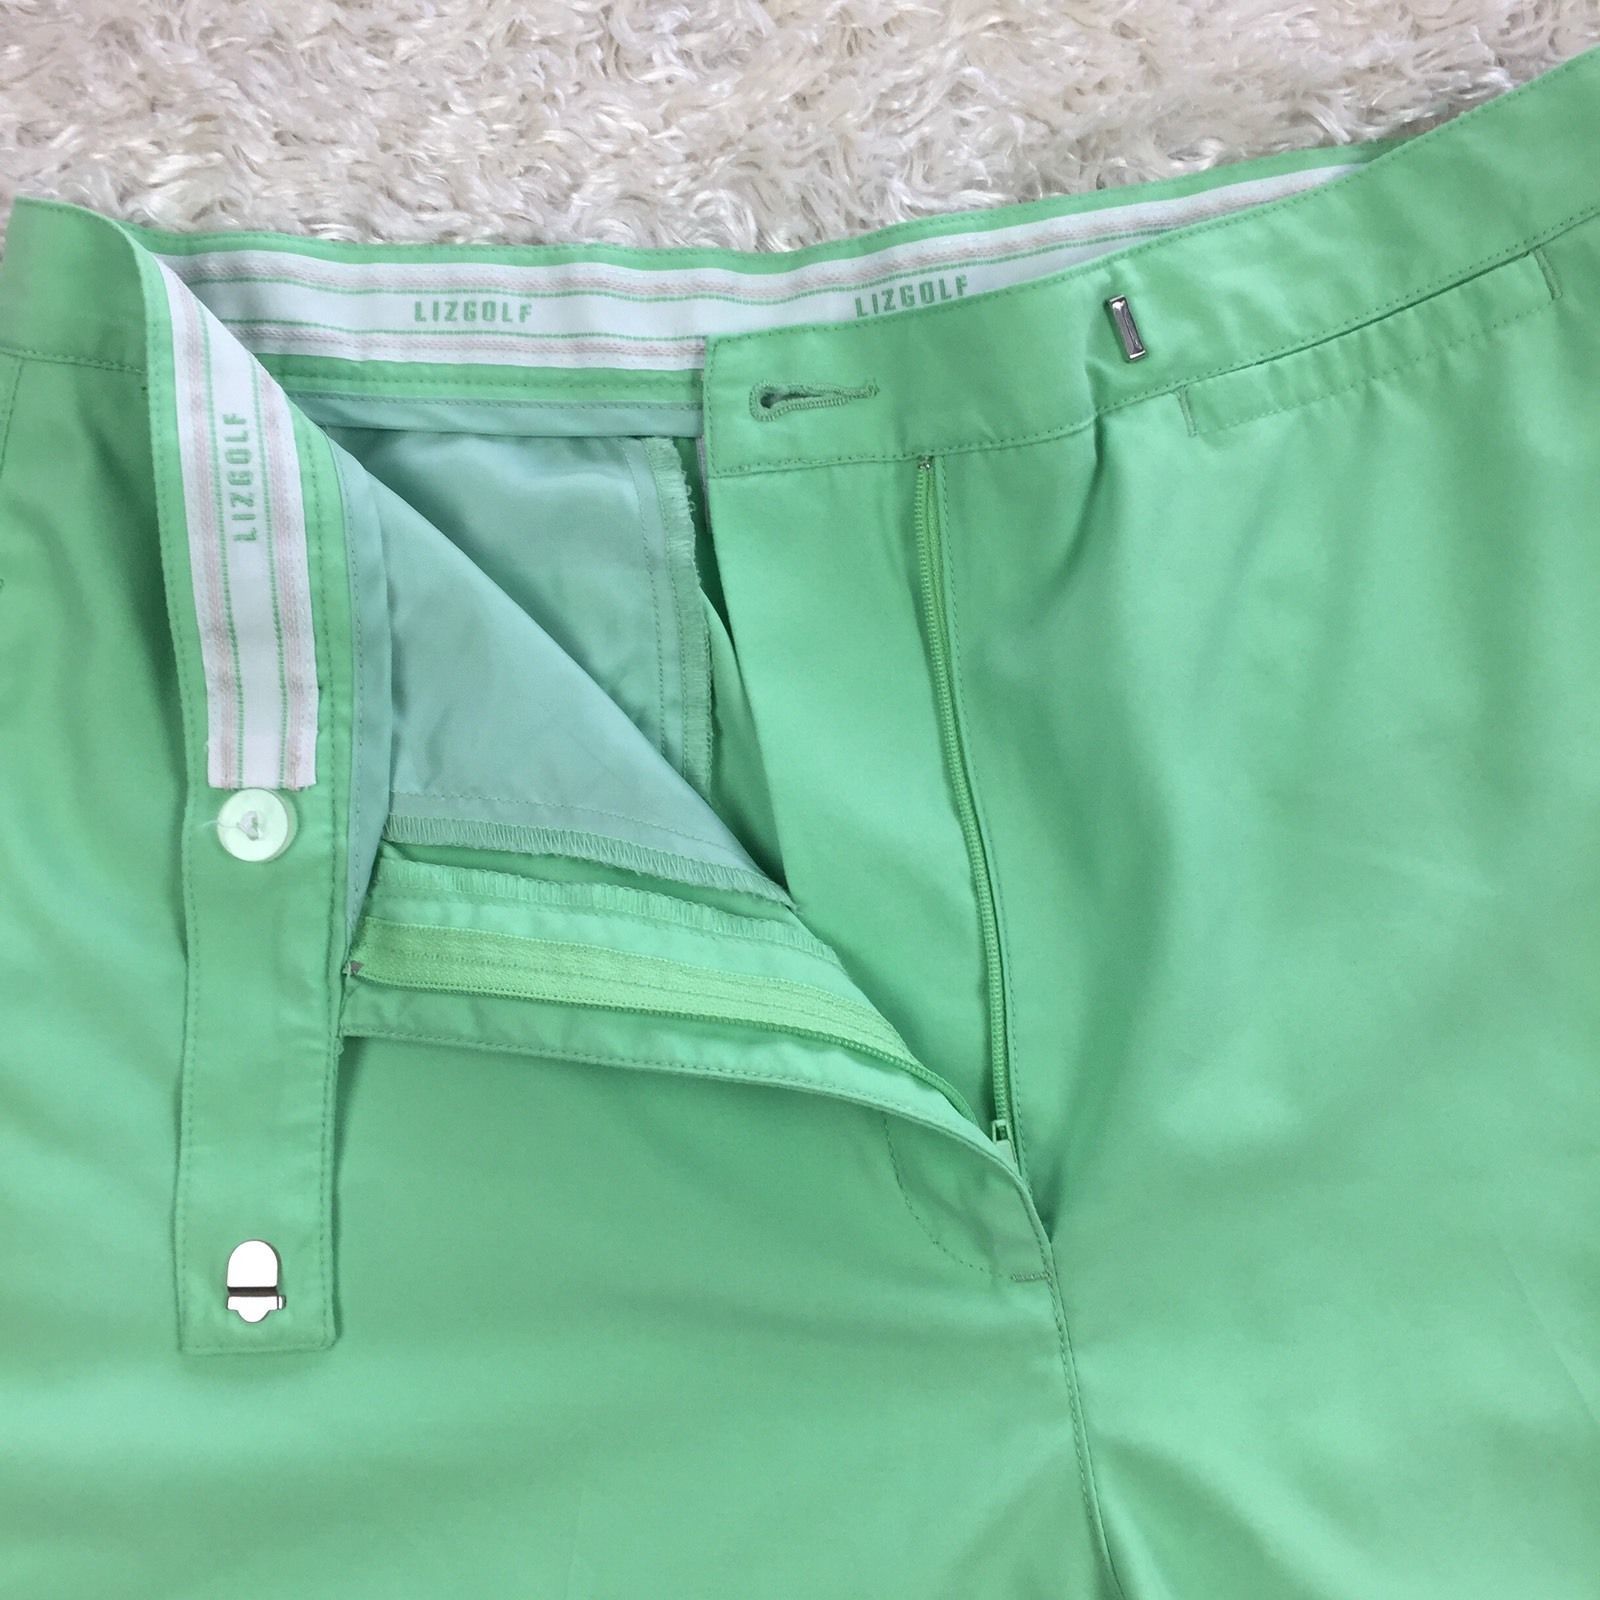 Liz Golf Liz Claiborne Bright Green Bermuda Walking Shorts Size 8 - Pants